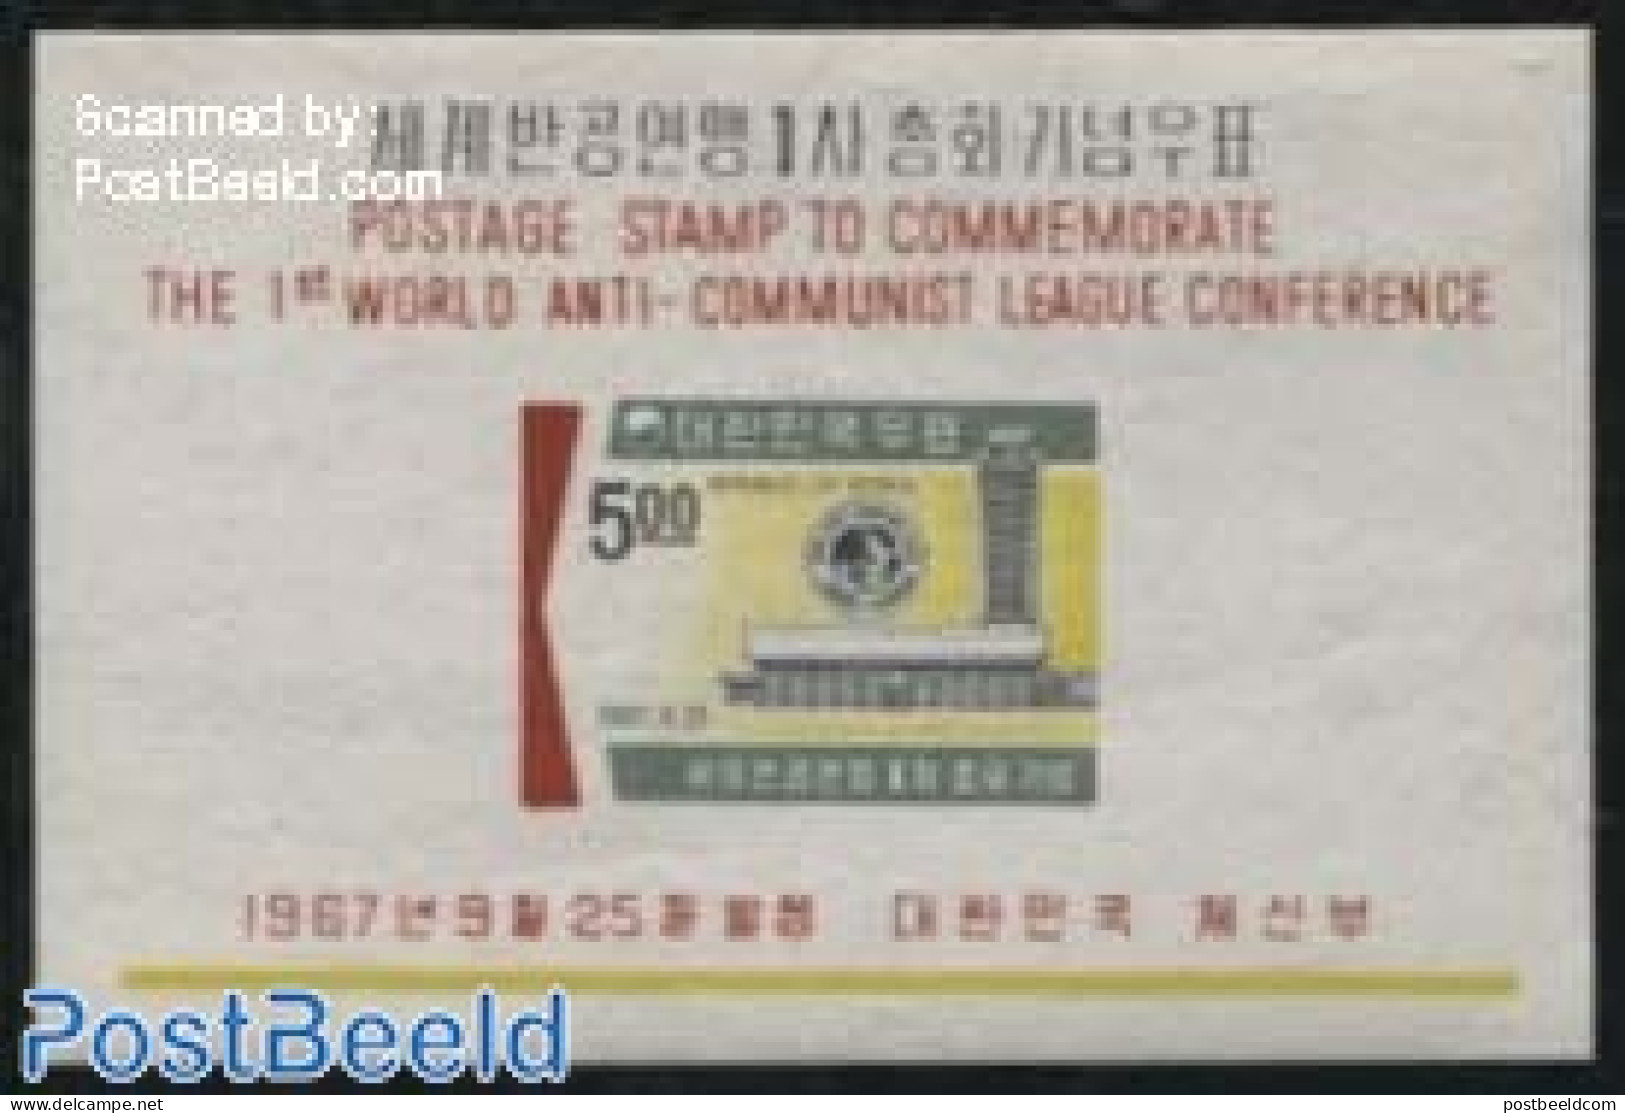 Korea, South 1967 Anti-Communist League S/s, Mint NH - Korea, South